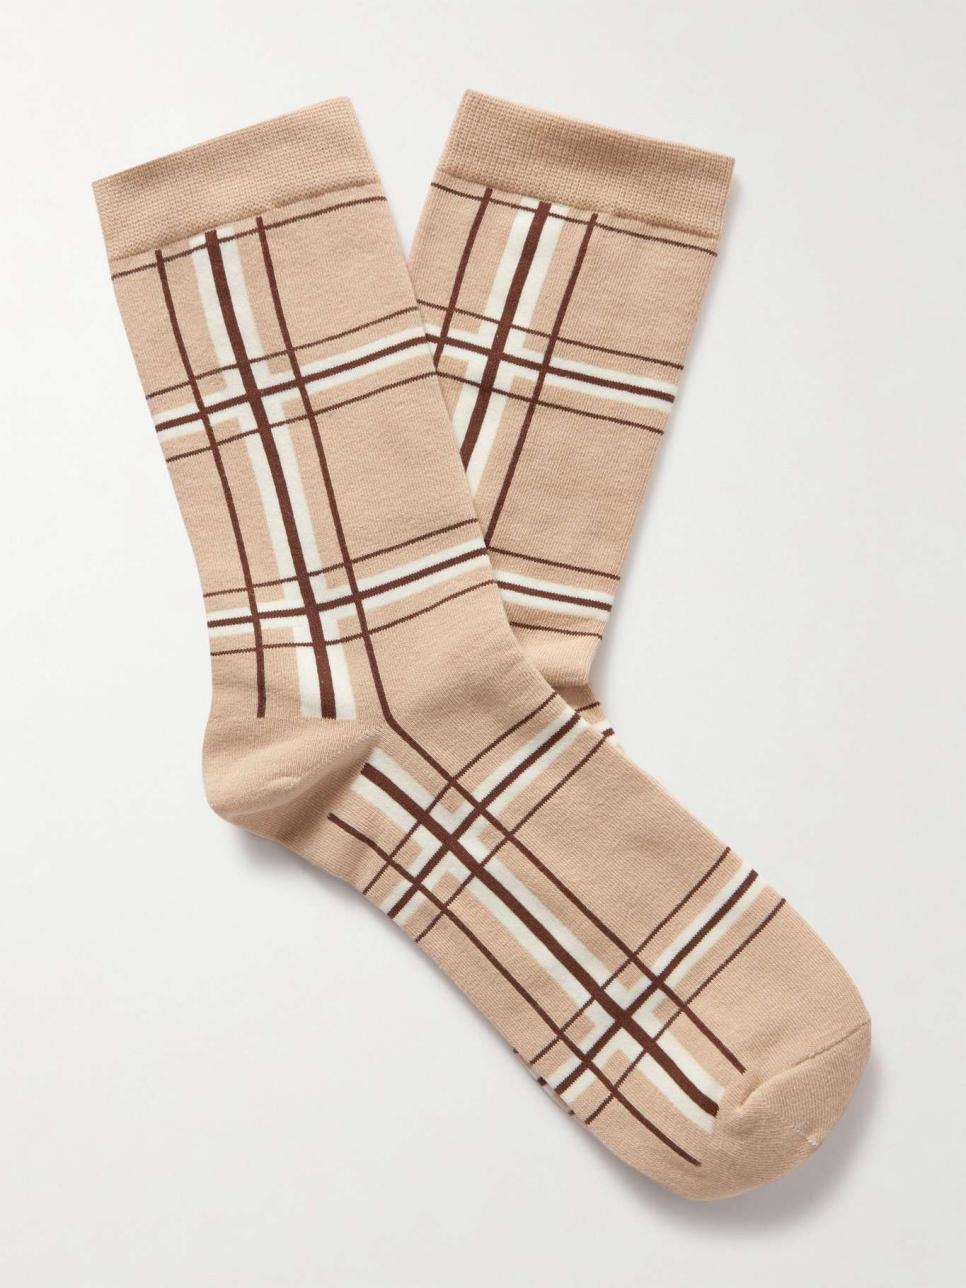 rx-mrportermalbon-golf-tradition-checked-cotton-blend-golf-socks.jpeg